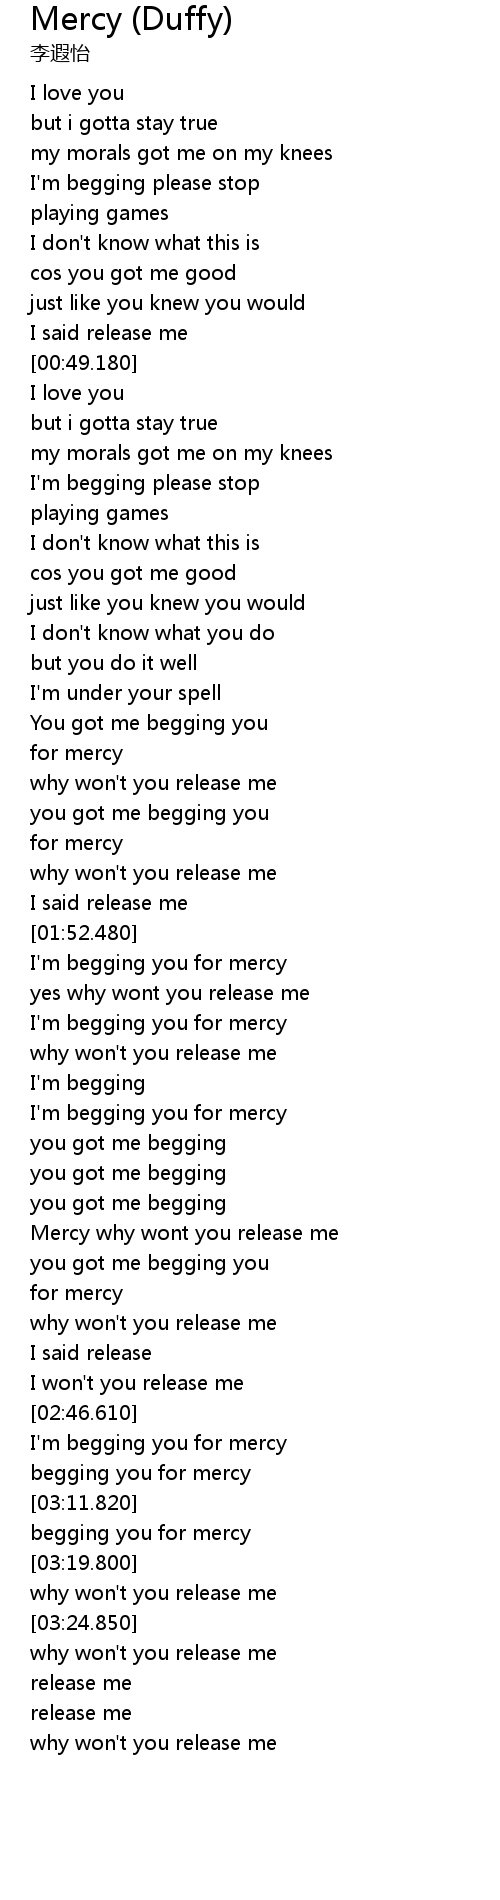 Mercy (Duffy) - Follow Lyrics